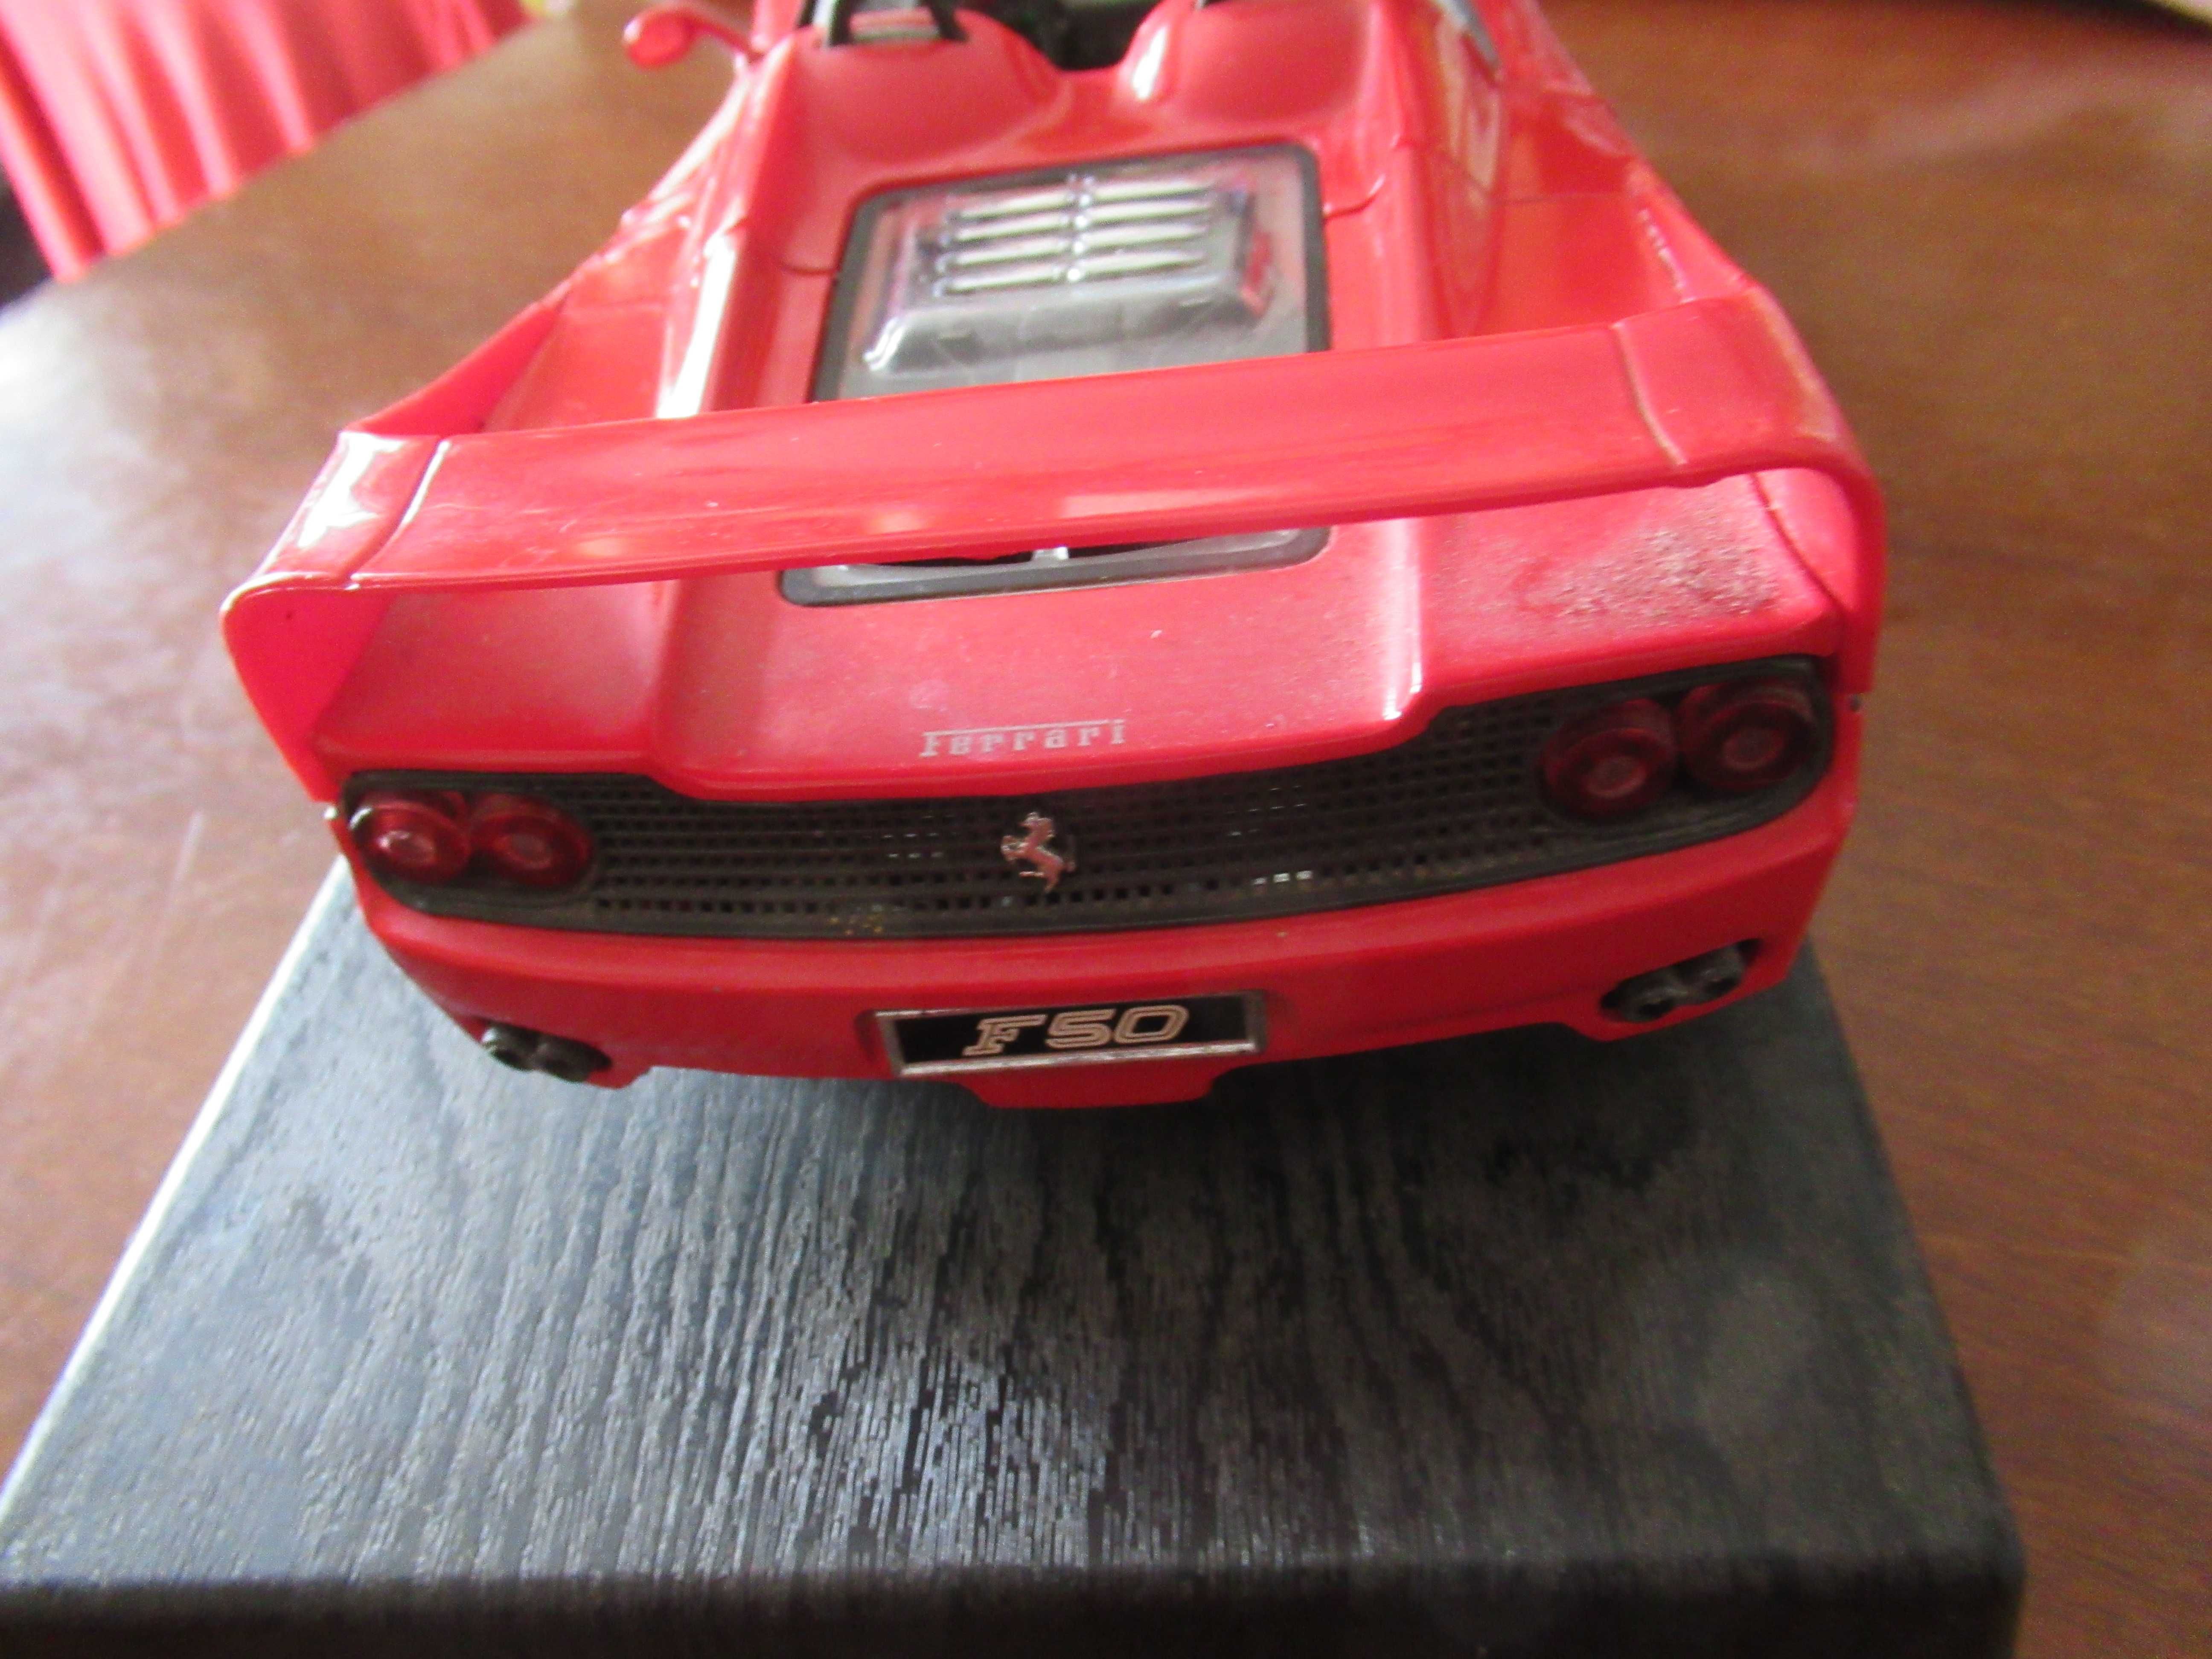 Réplica de Carro  da marca "Ferrari"